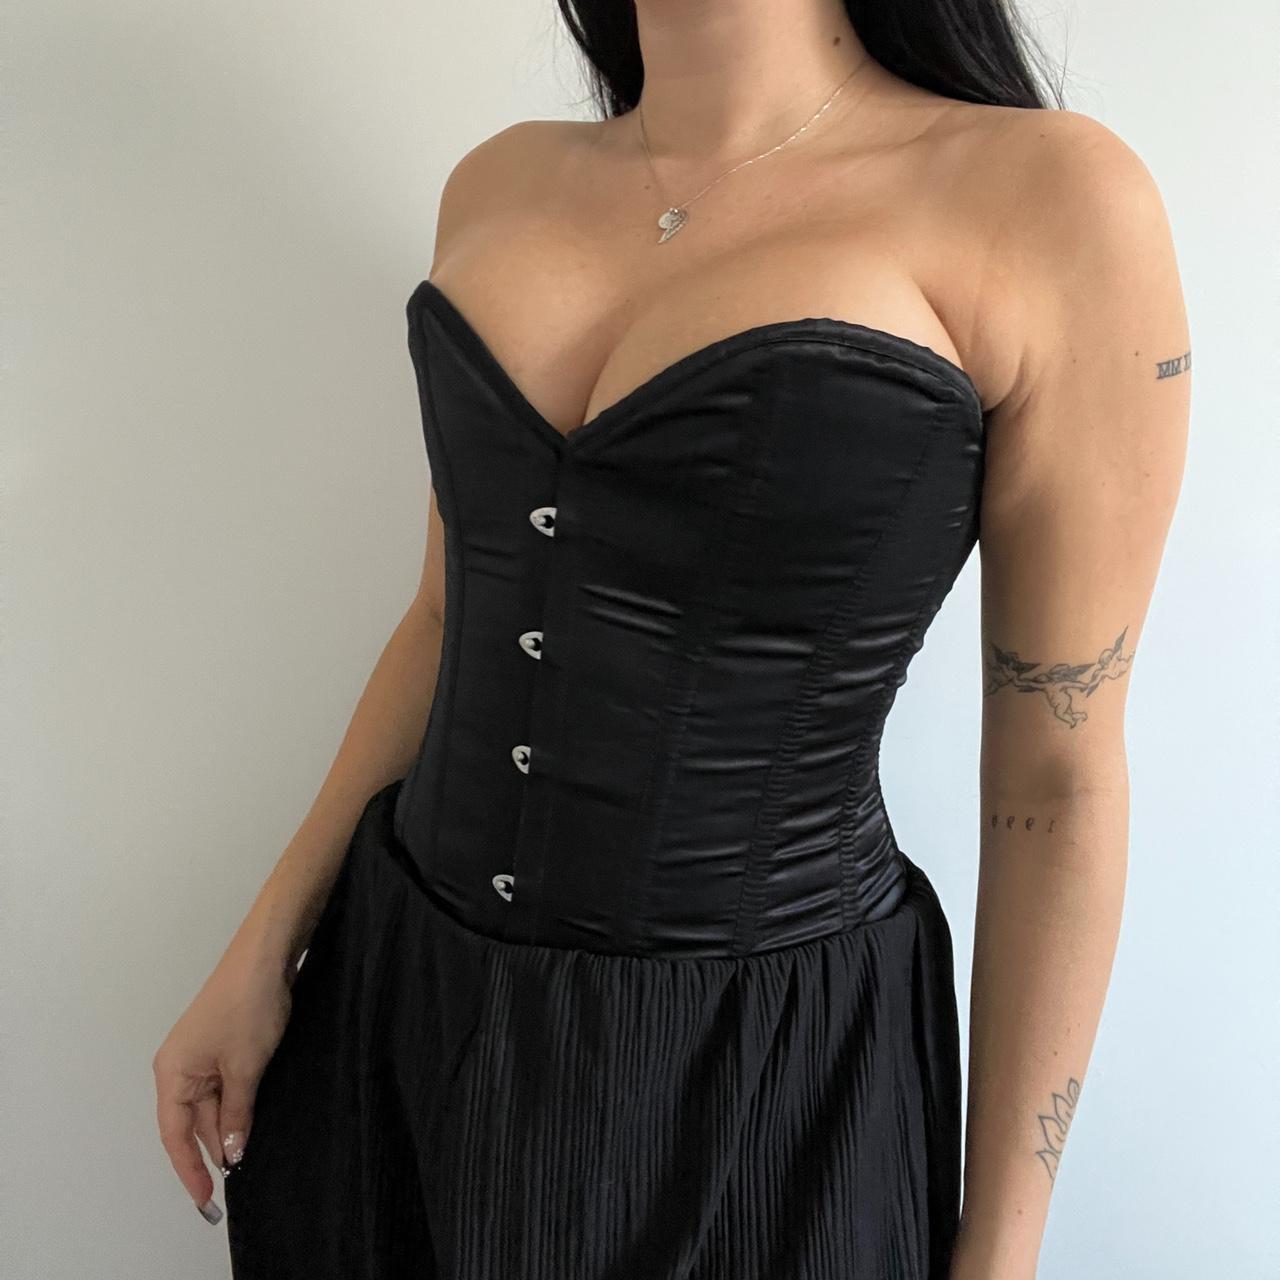 Black bustier corsets